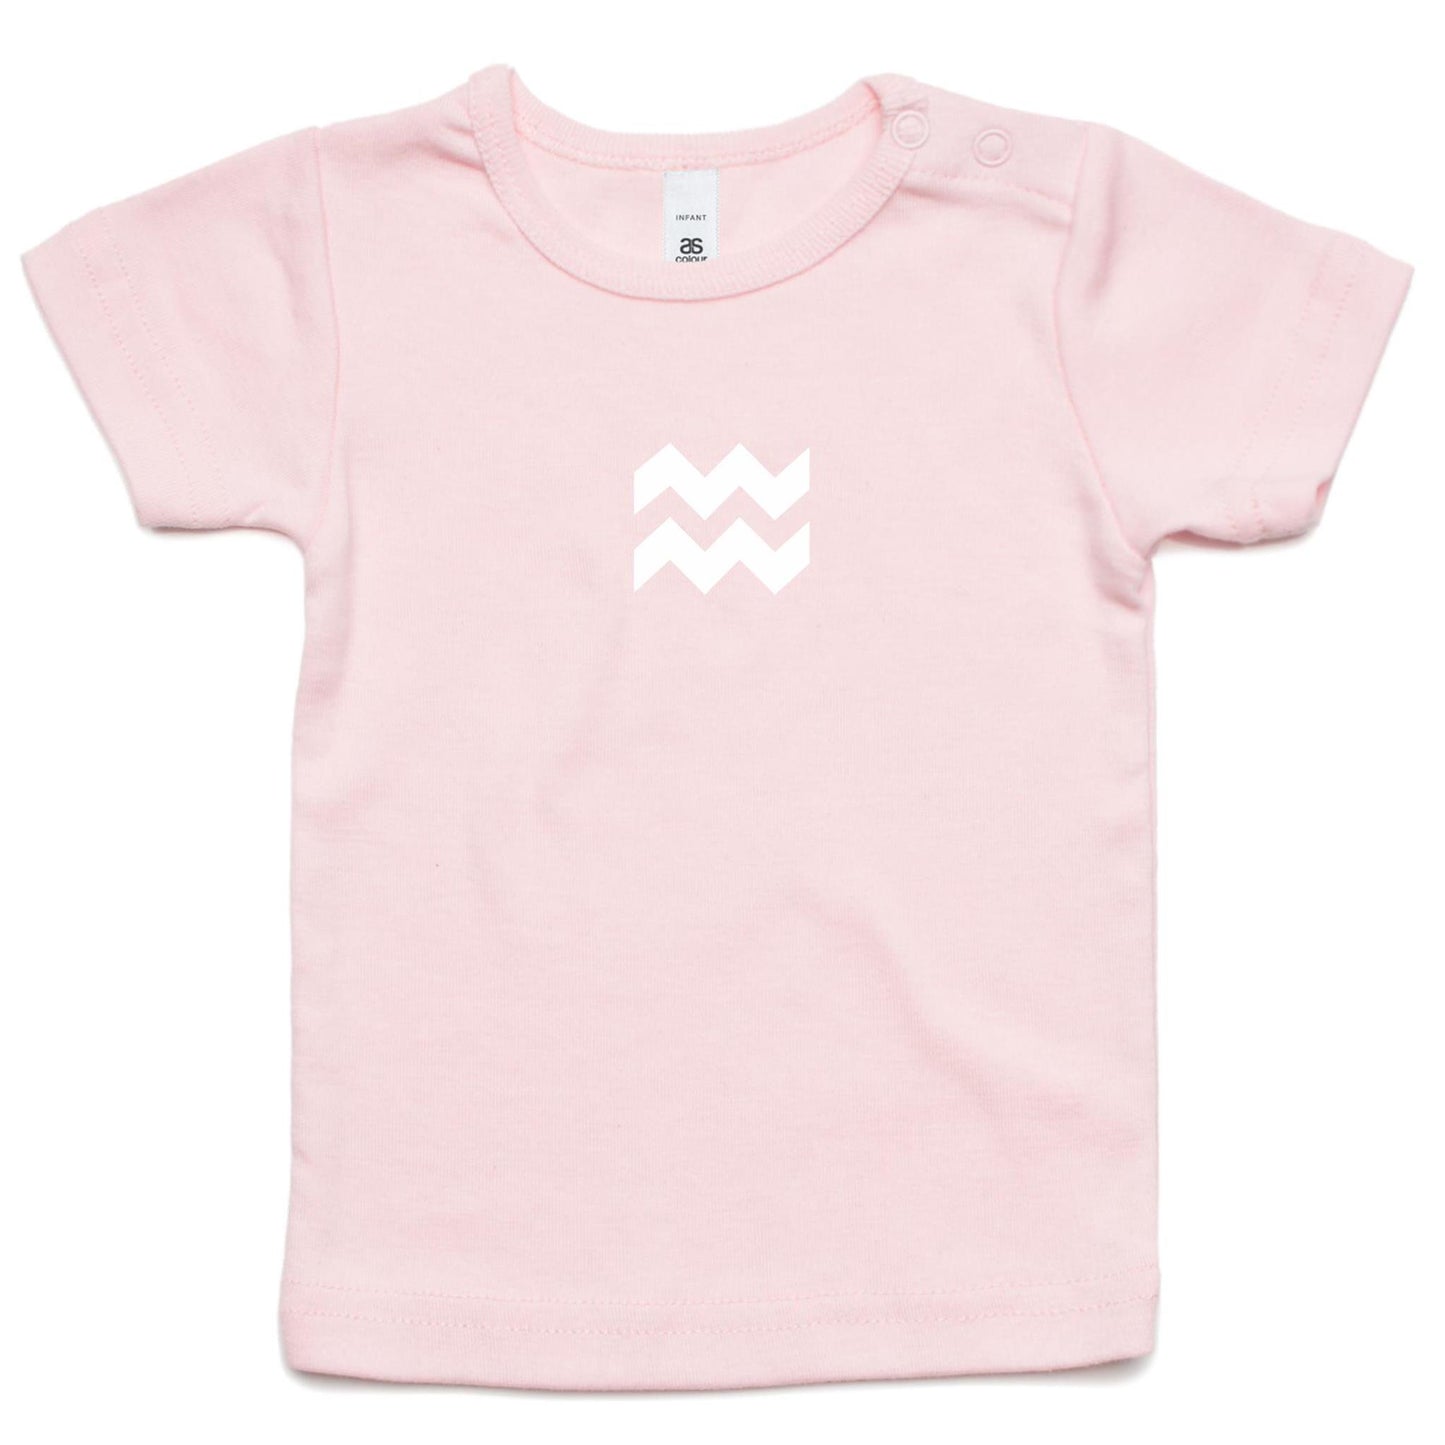 Aquarius T Shirts for Babies